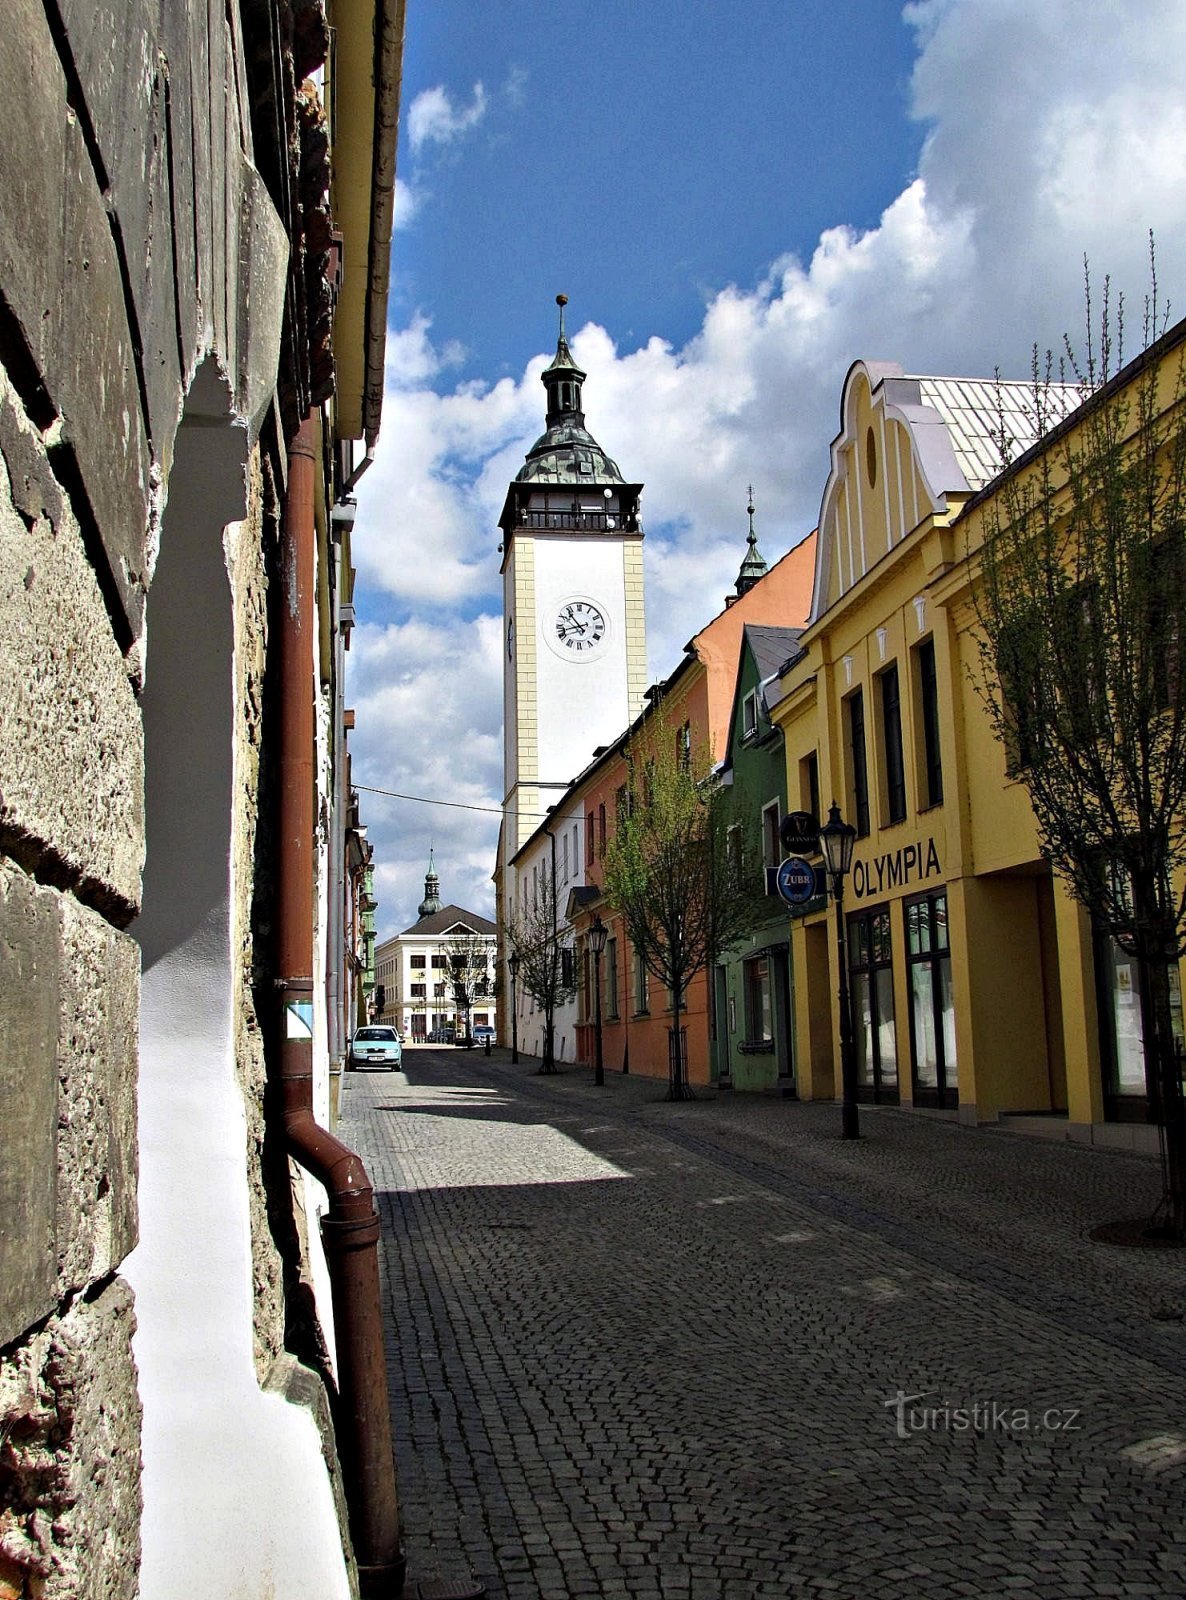 Hranic Old Town Hall